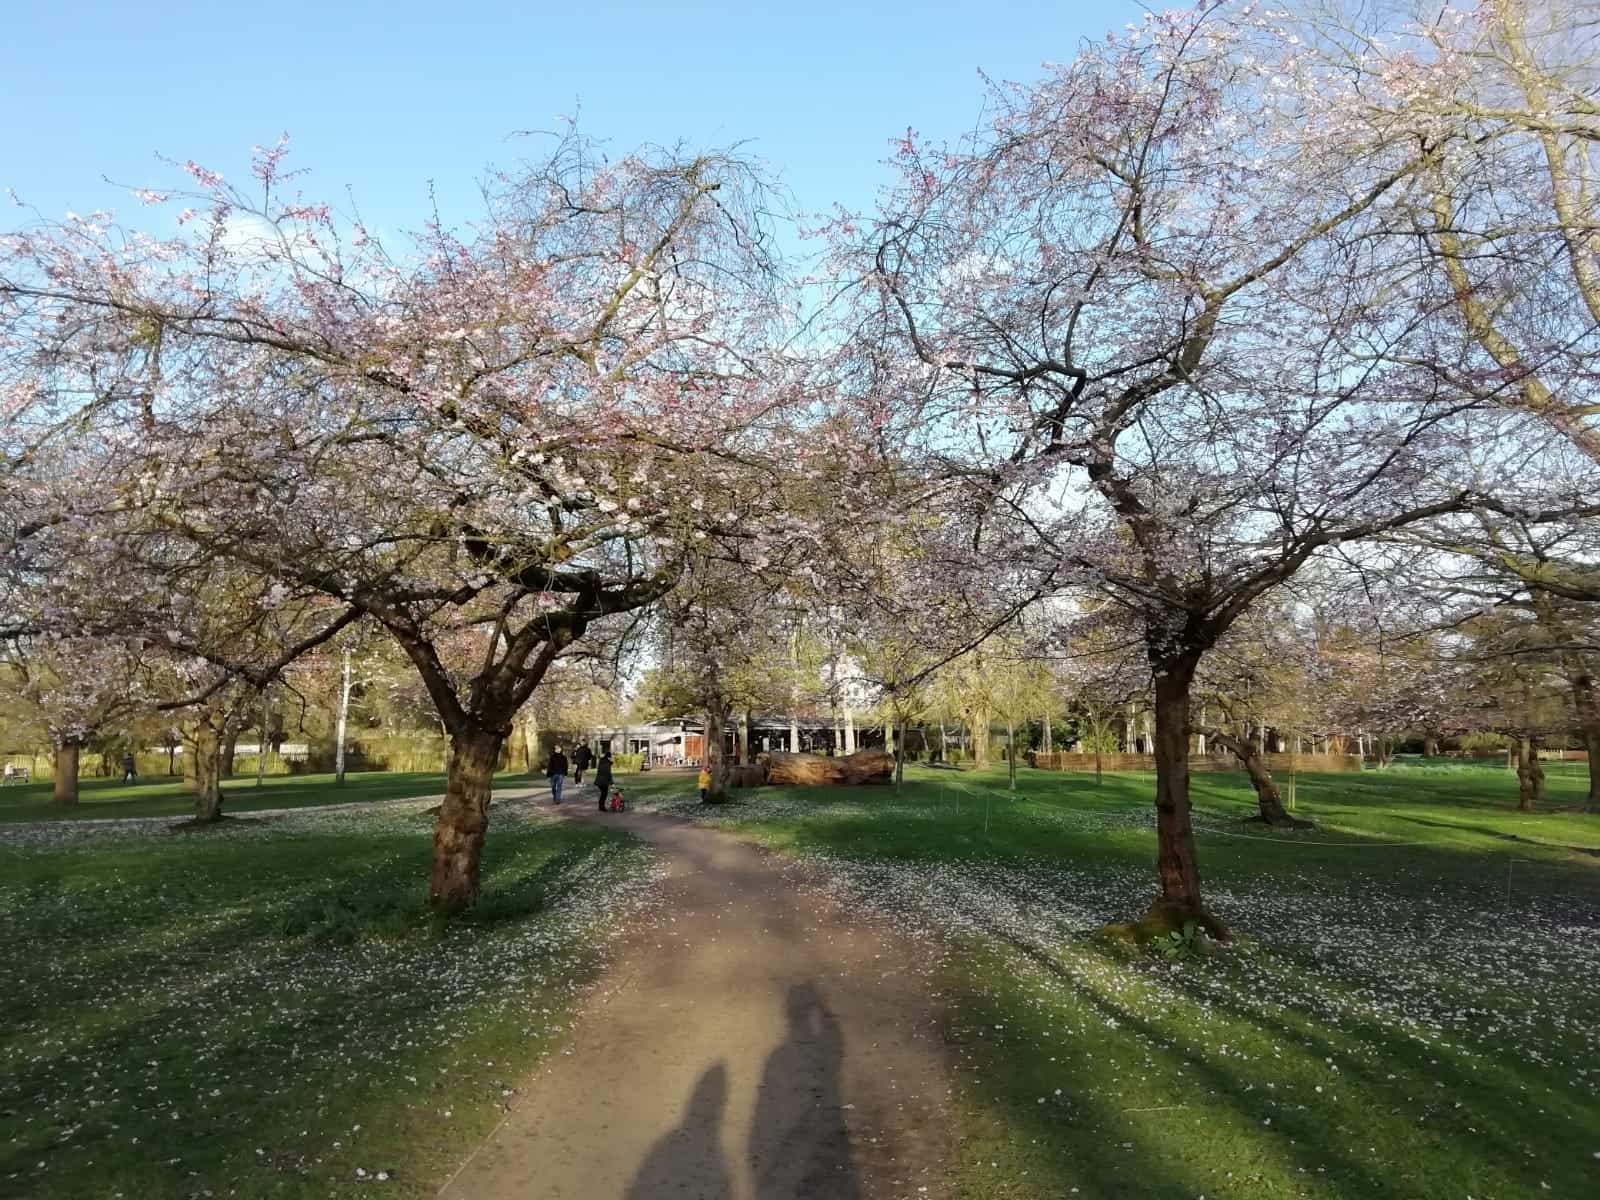 Blossom trees in Bushy Park, London